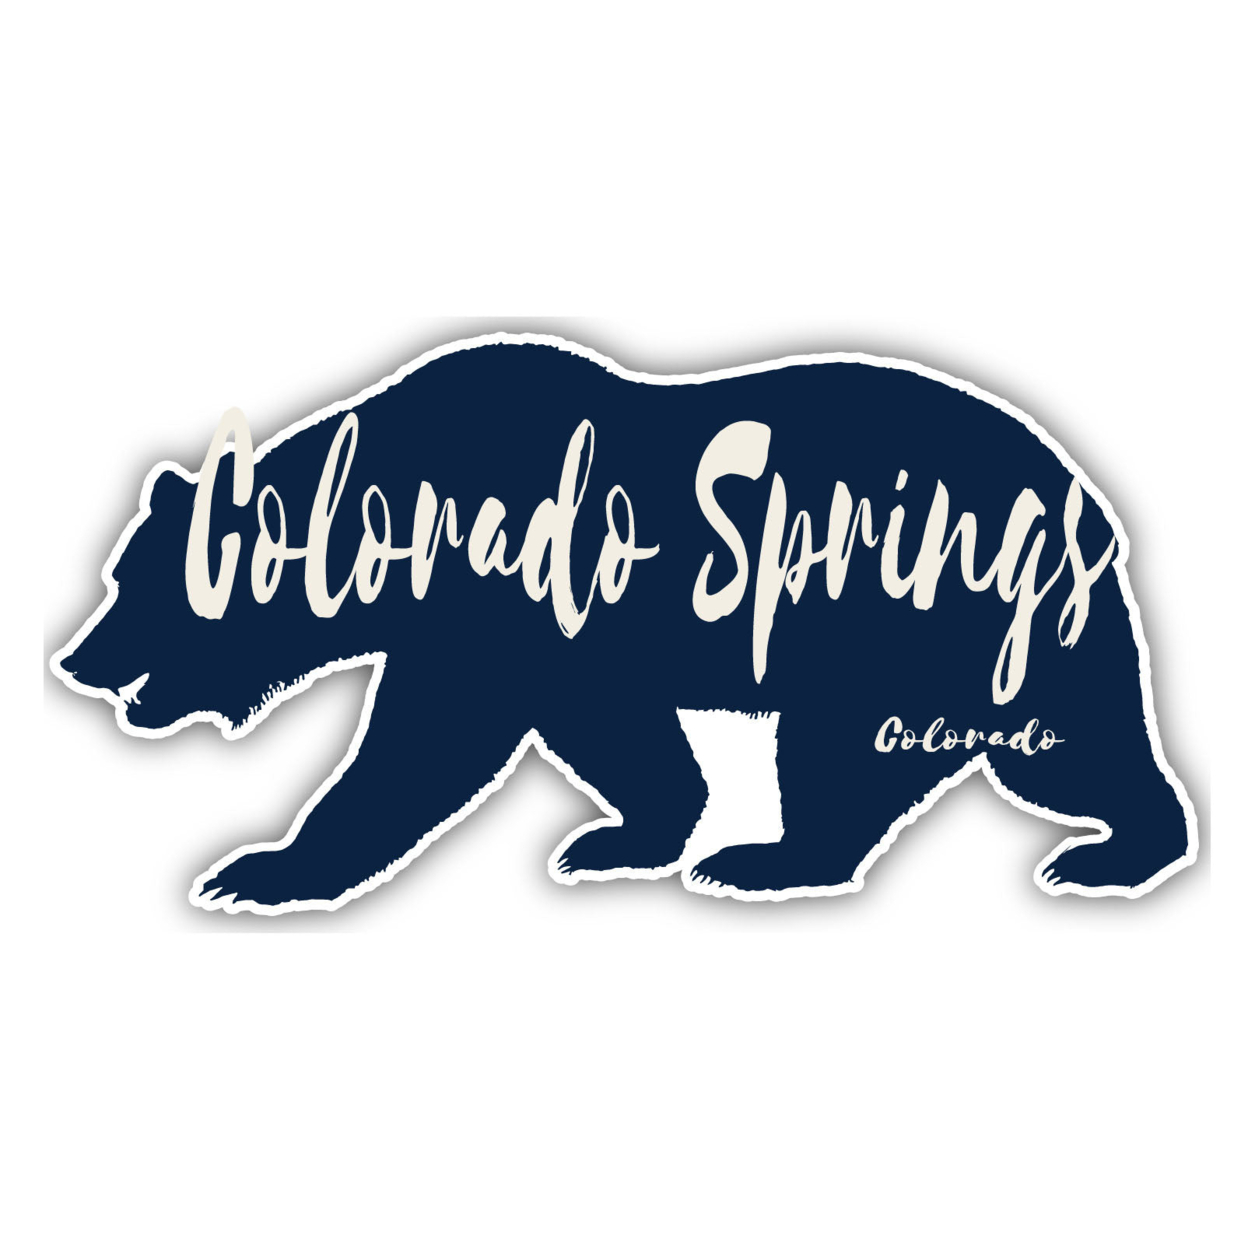 Colorado Springs Colorado Souvenir Decorative Stickers (Choose Theme And Size) - Single Unit, 8-Inch, Tent